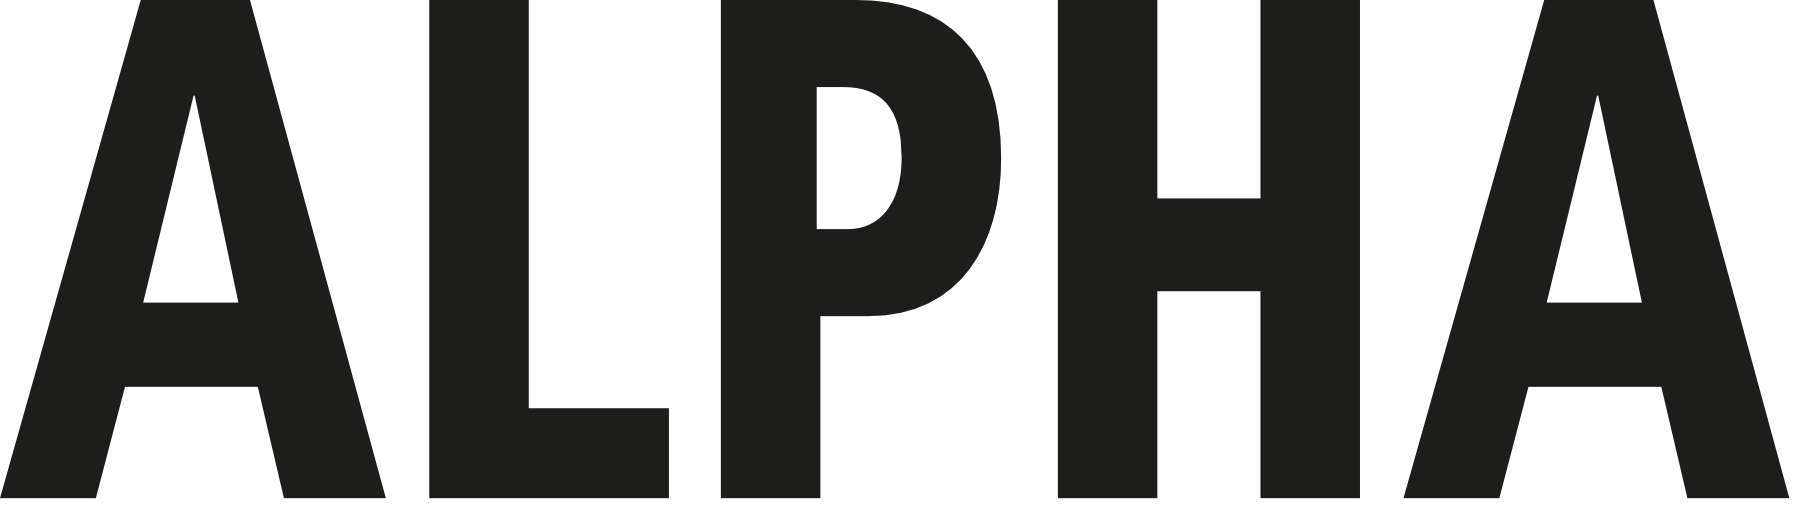 Alpha milkpowders brand logo